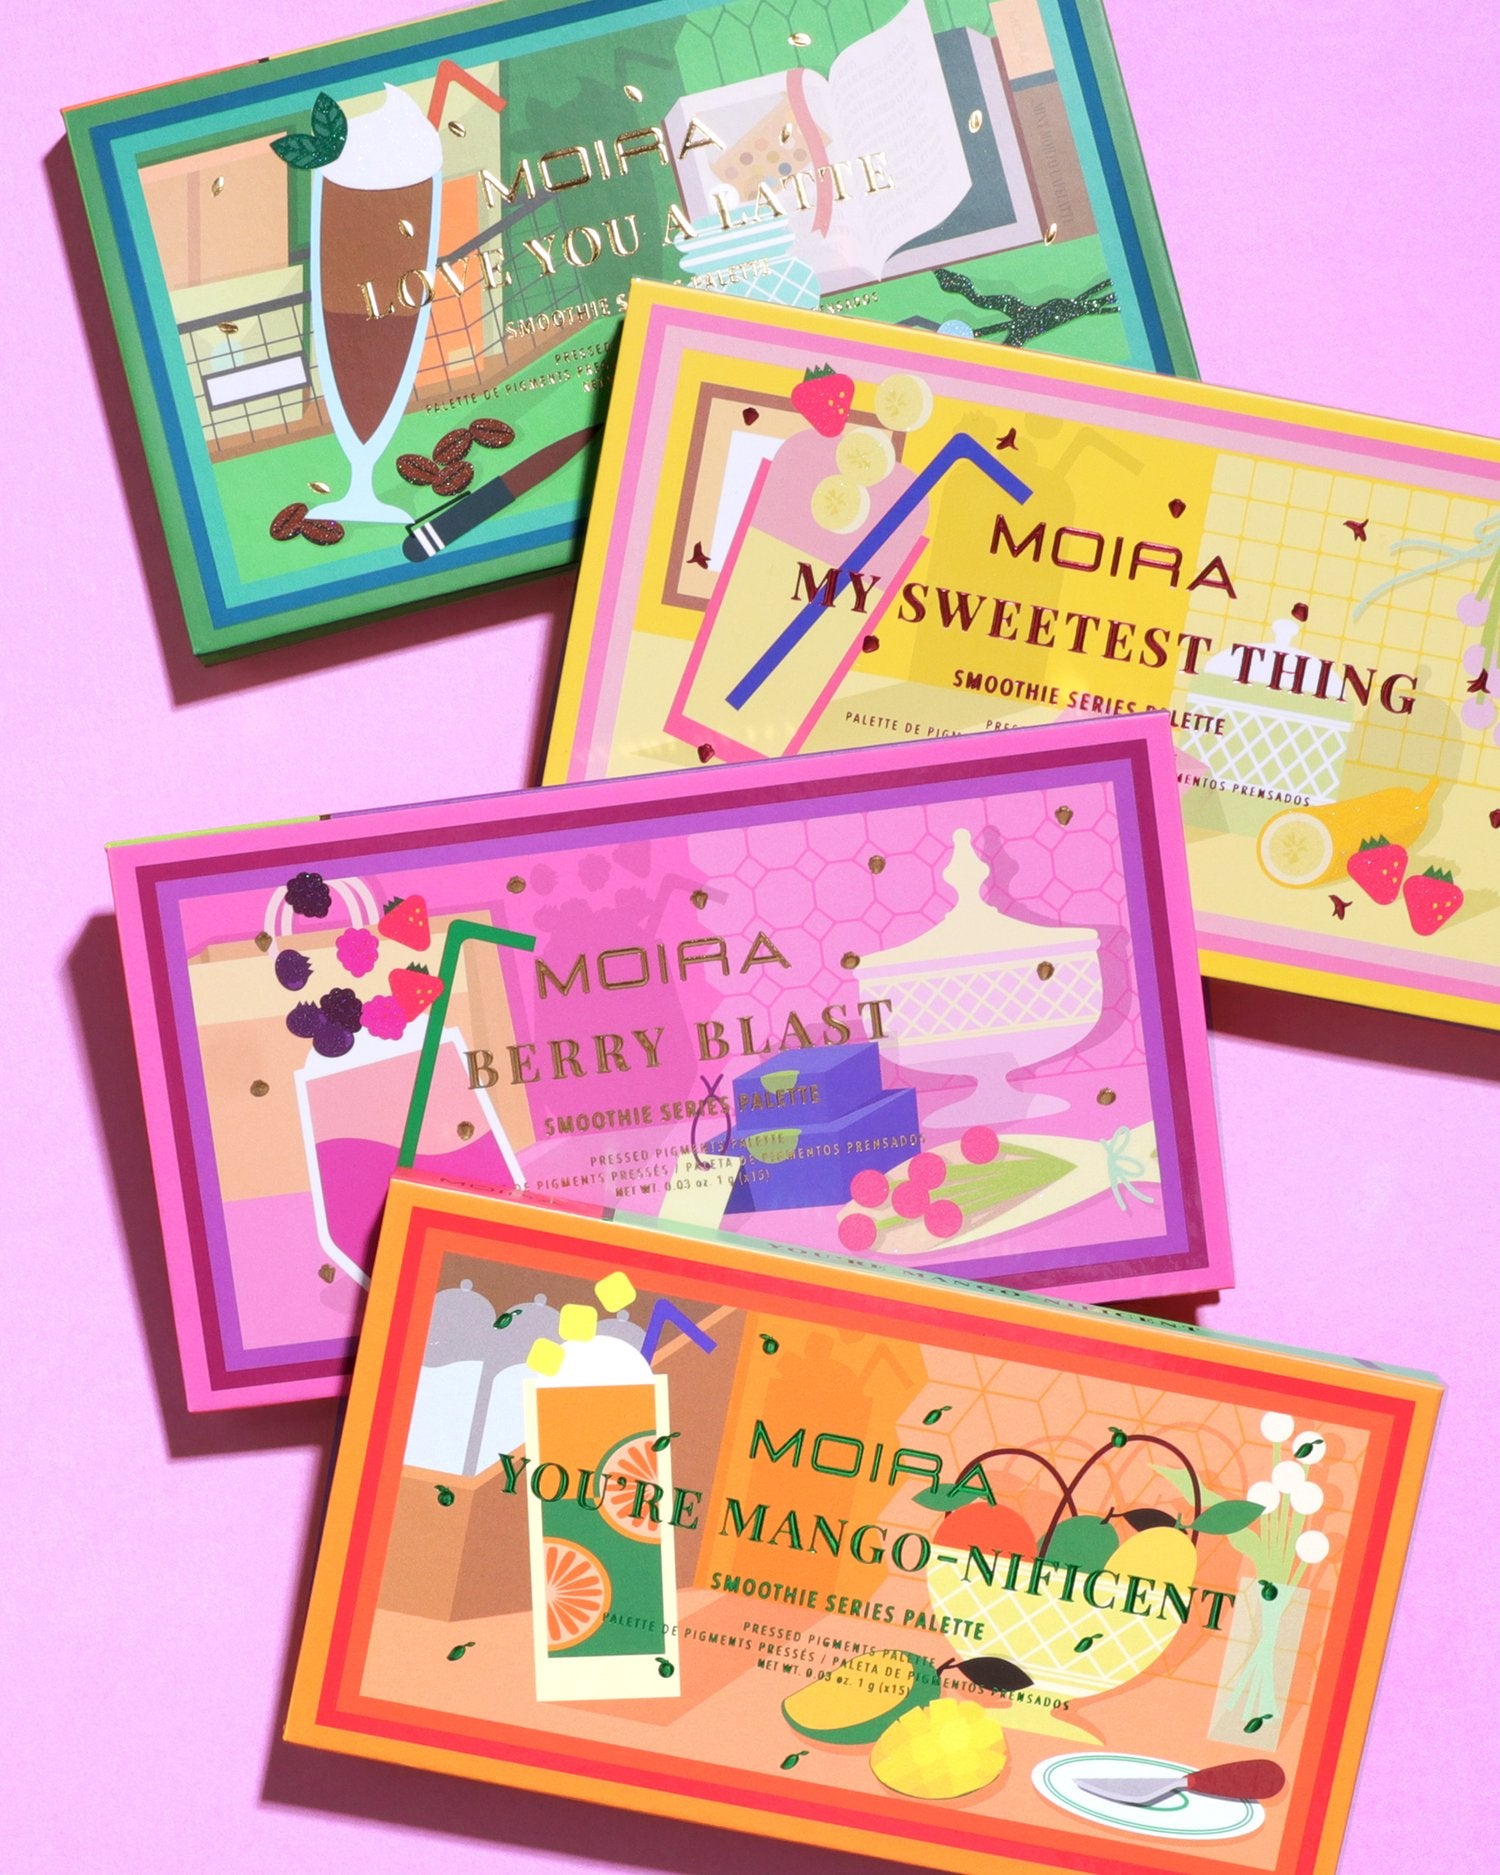 Moira Beauty - Smoothie Series Palette Bundle